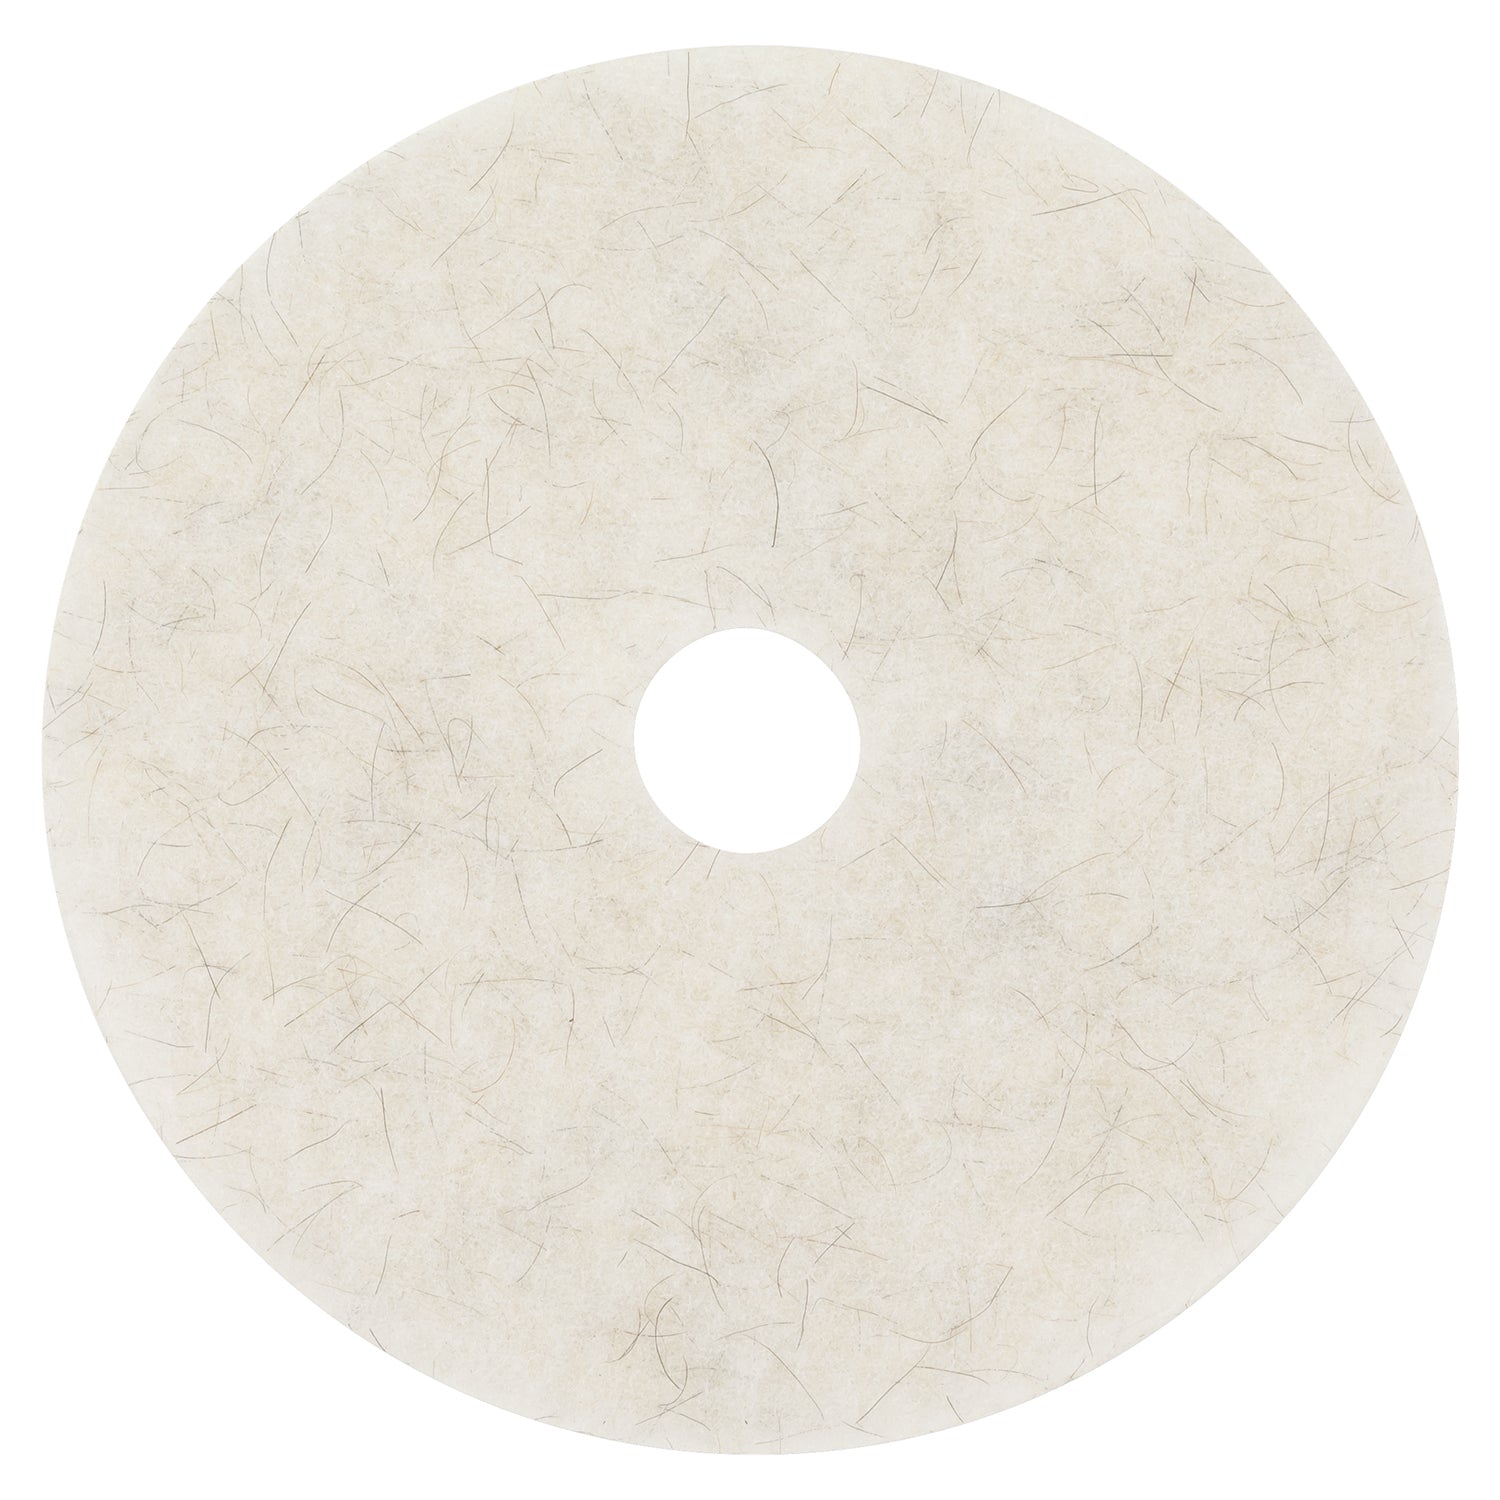 ultra-high-speed-natural-blend-floor-burnishing-pads-3300-24-diameter-white-5-carton_mmm18213 - 1